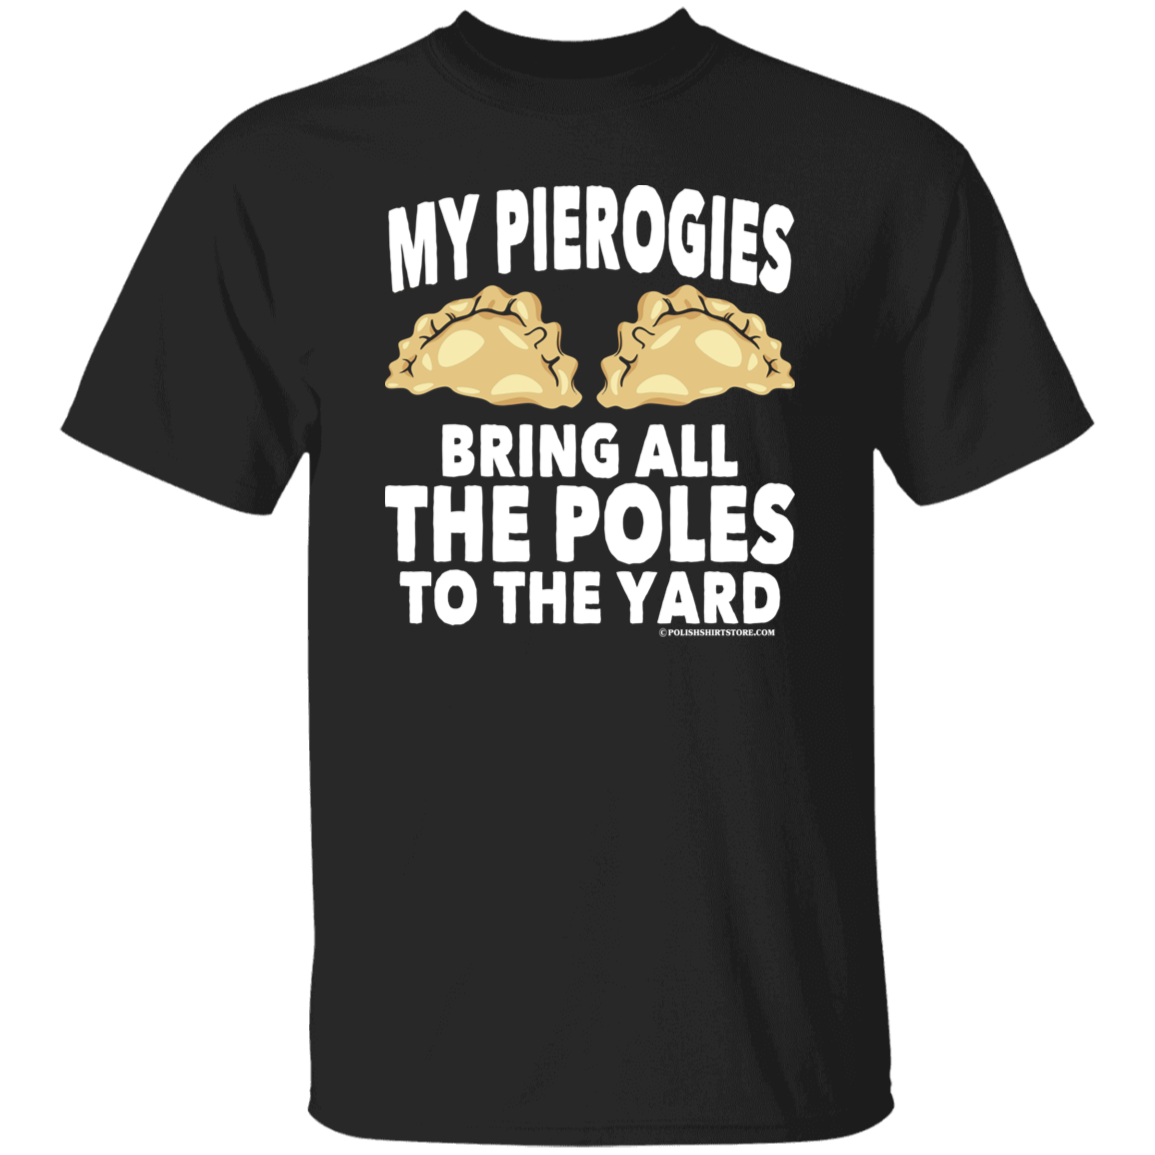 My Pierogies Bring All The Poles To The Yard Apparel CustomCat G500 5.3 oz. T-Shirt Black S